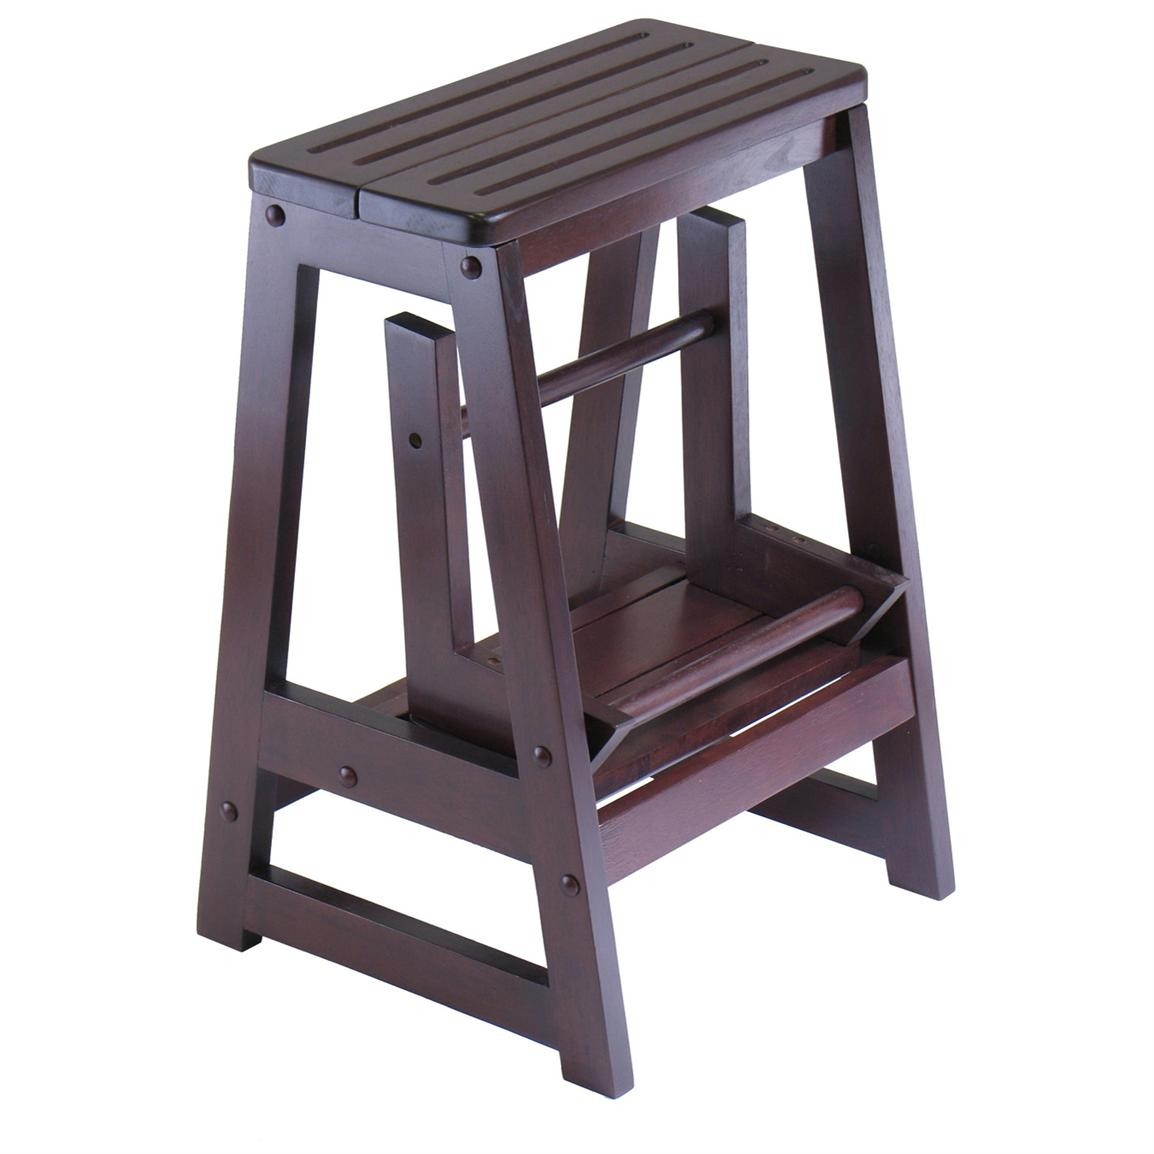 Folding wooden step stool